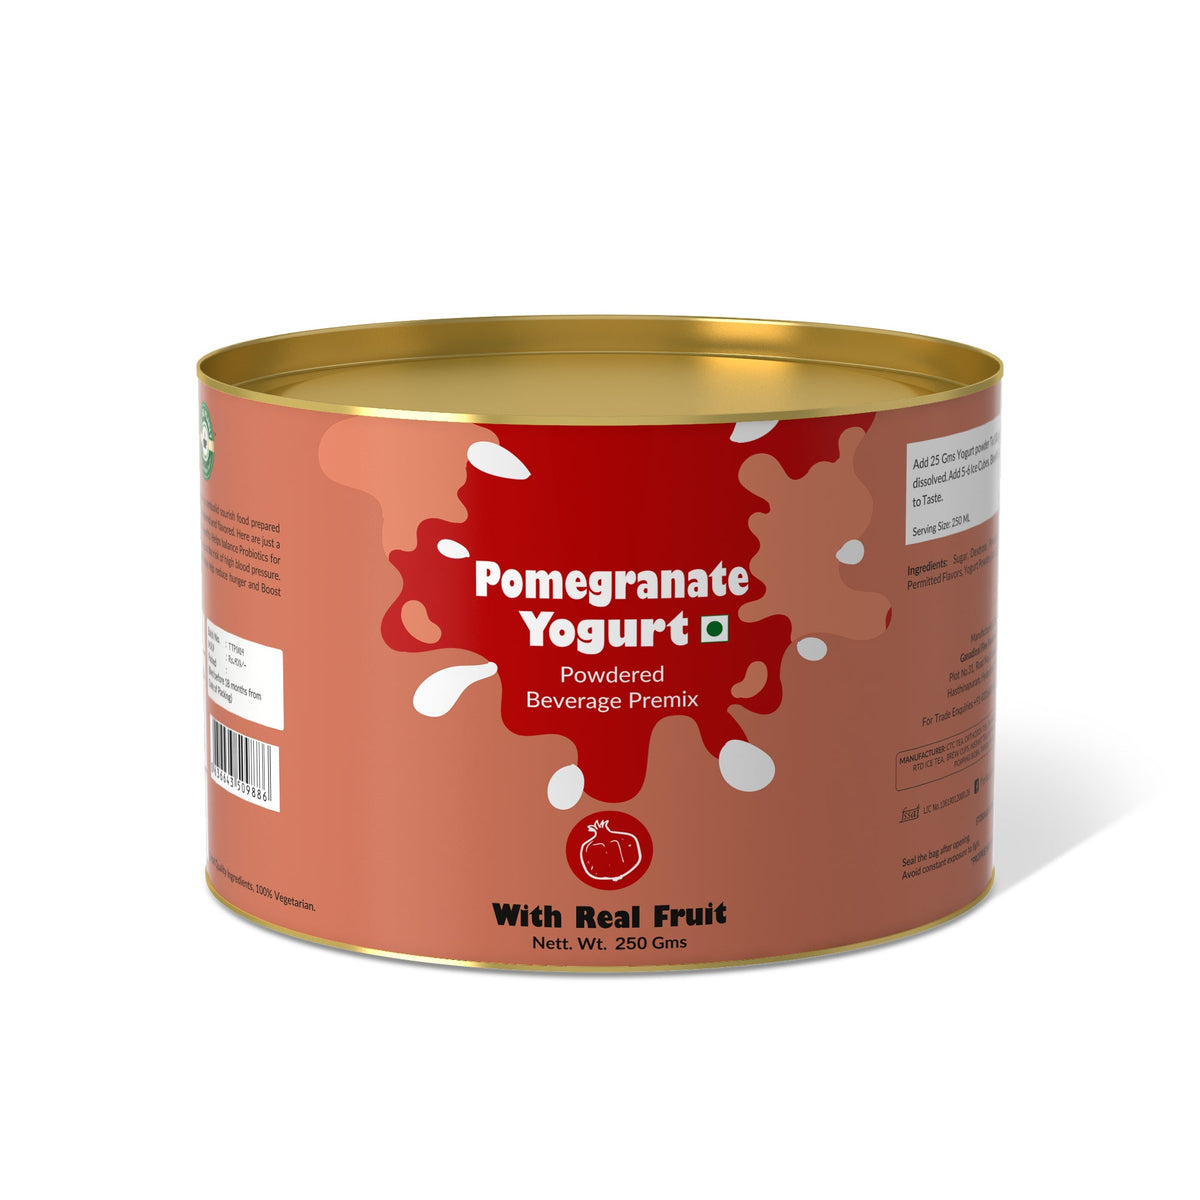 Pomegranate Yogurt Mix